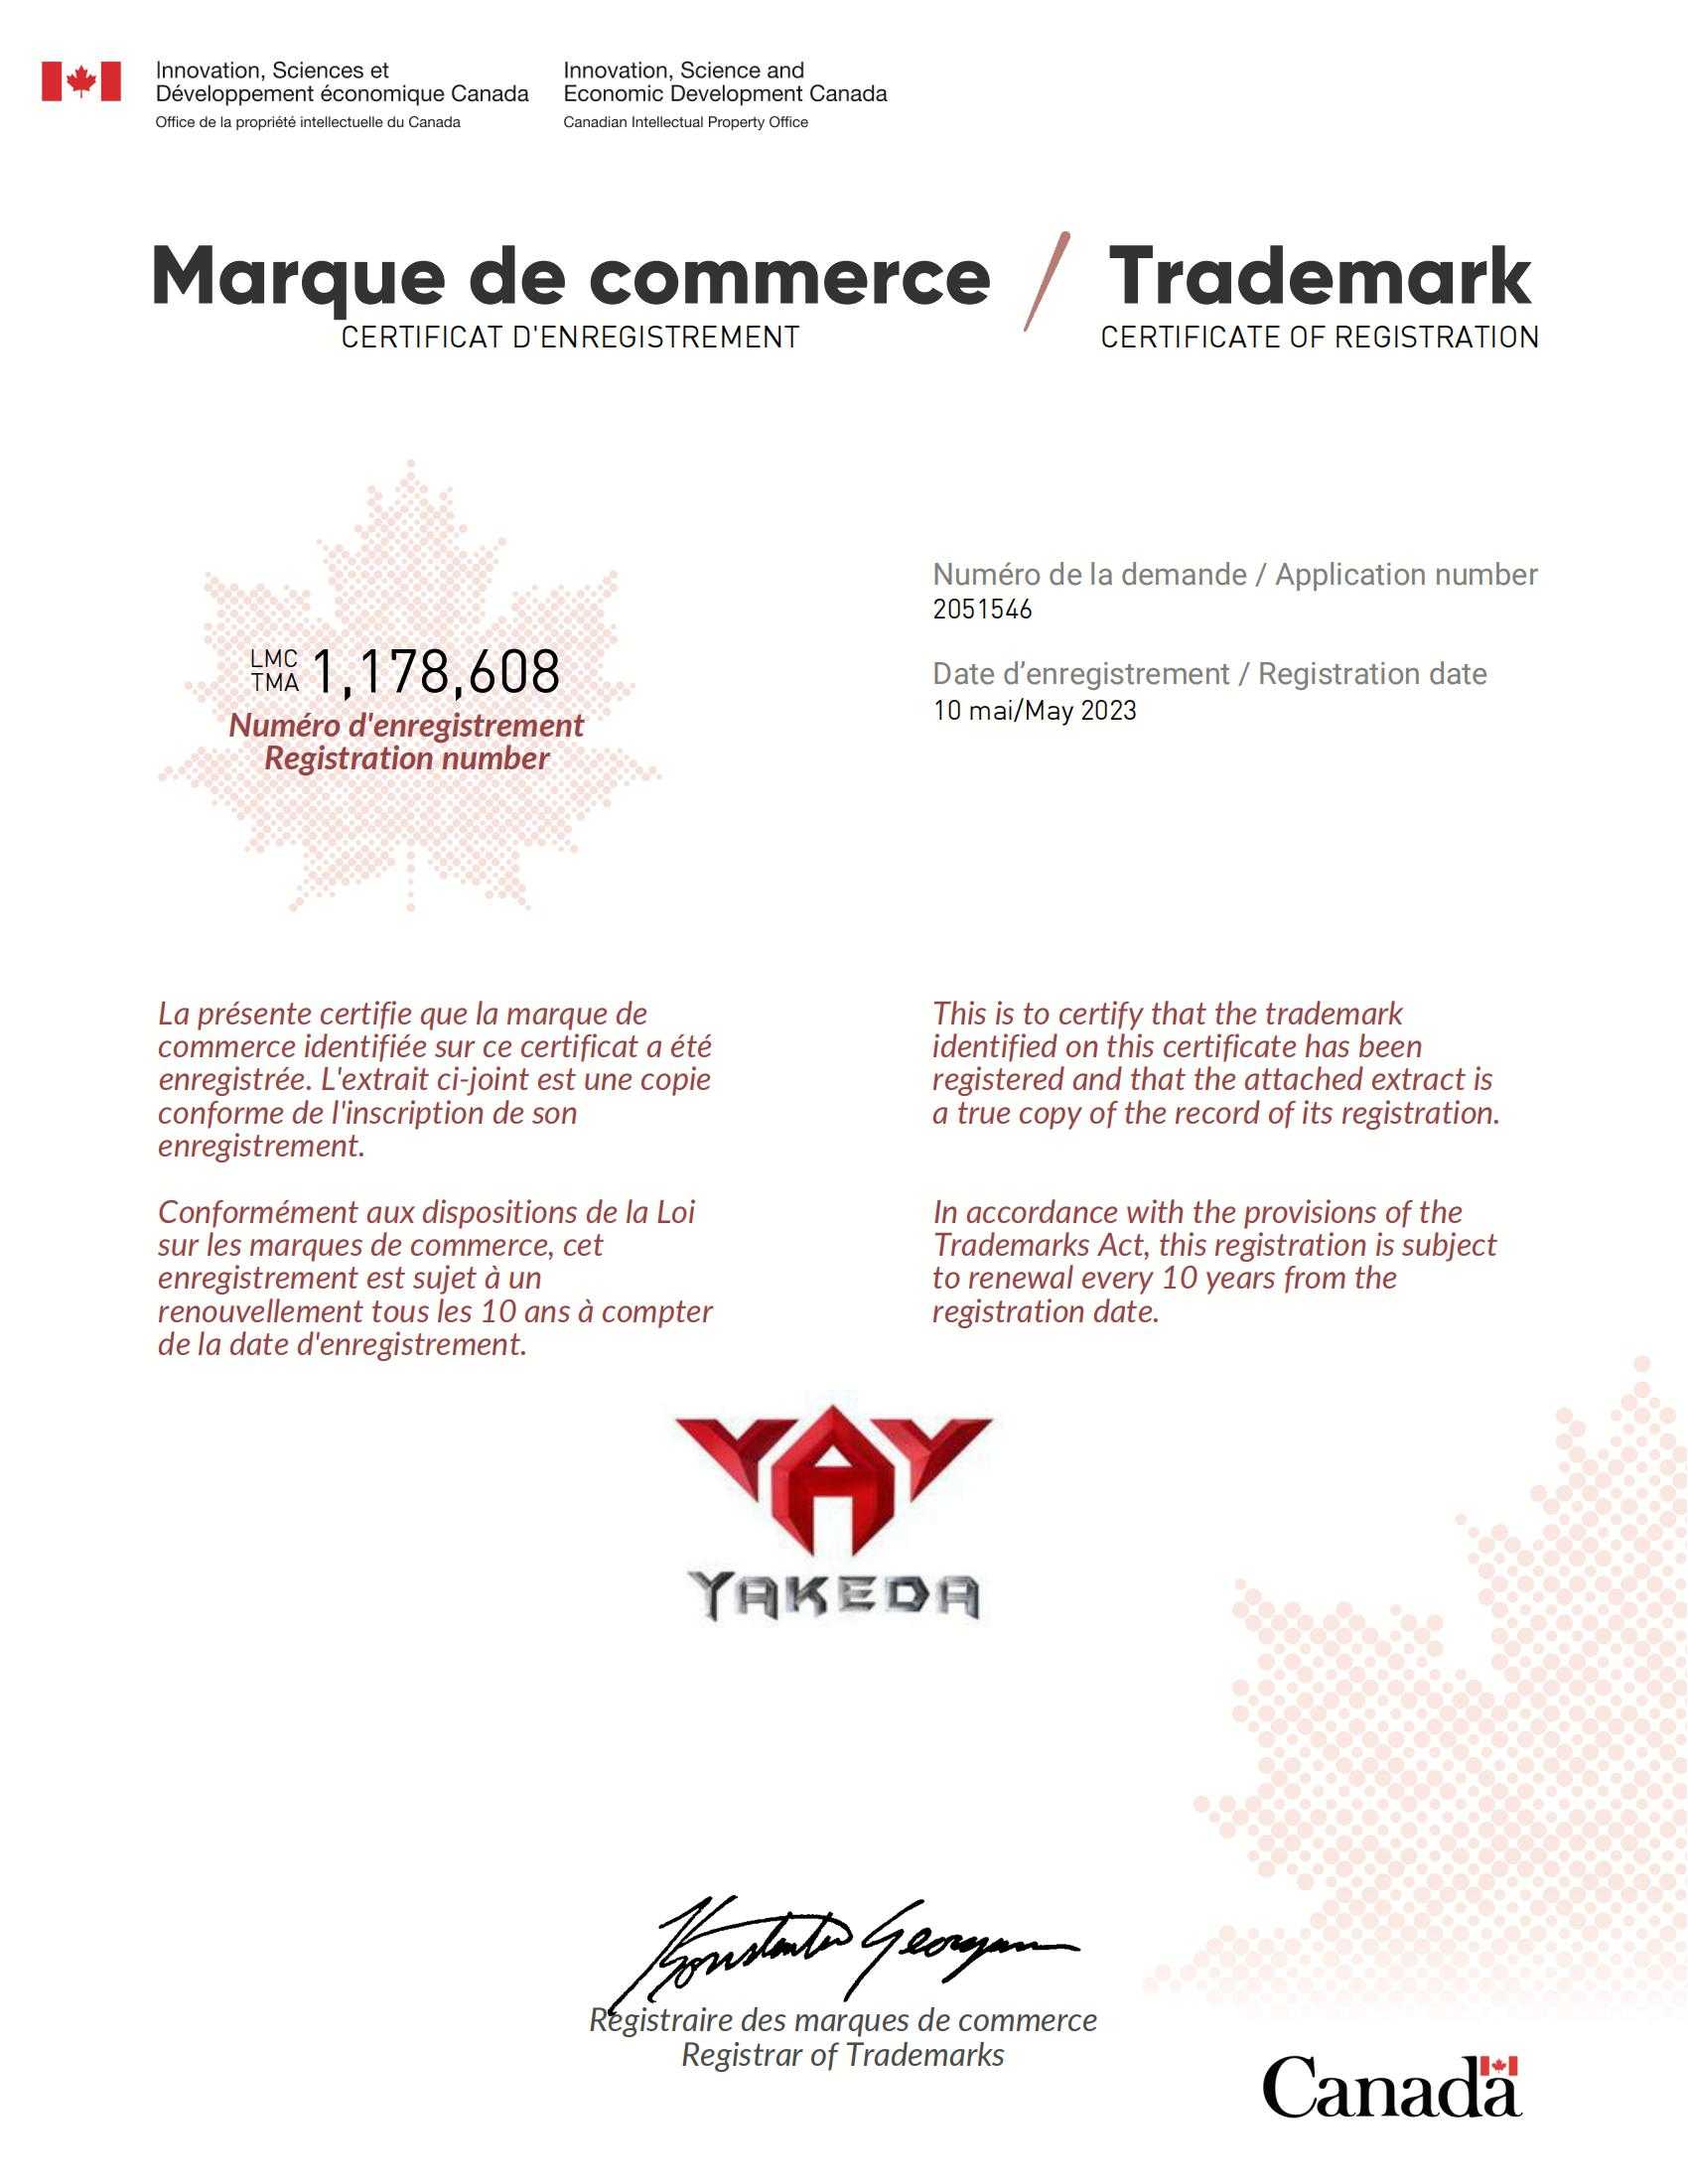 Сертификат товарного знака Канады